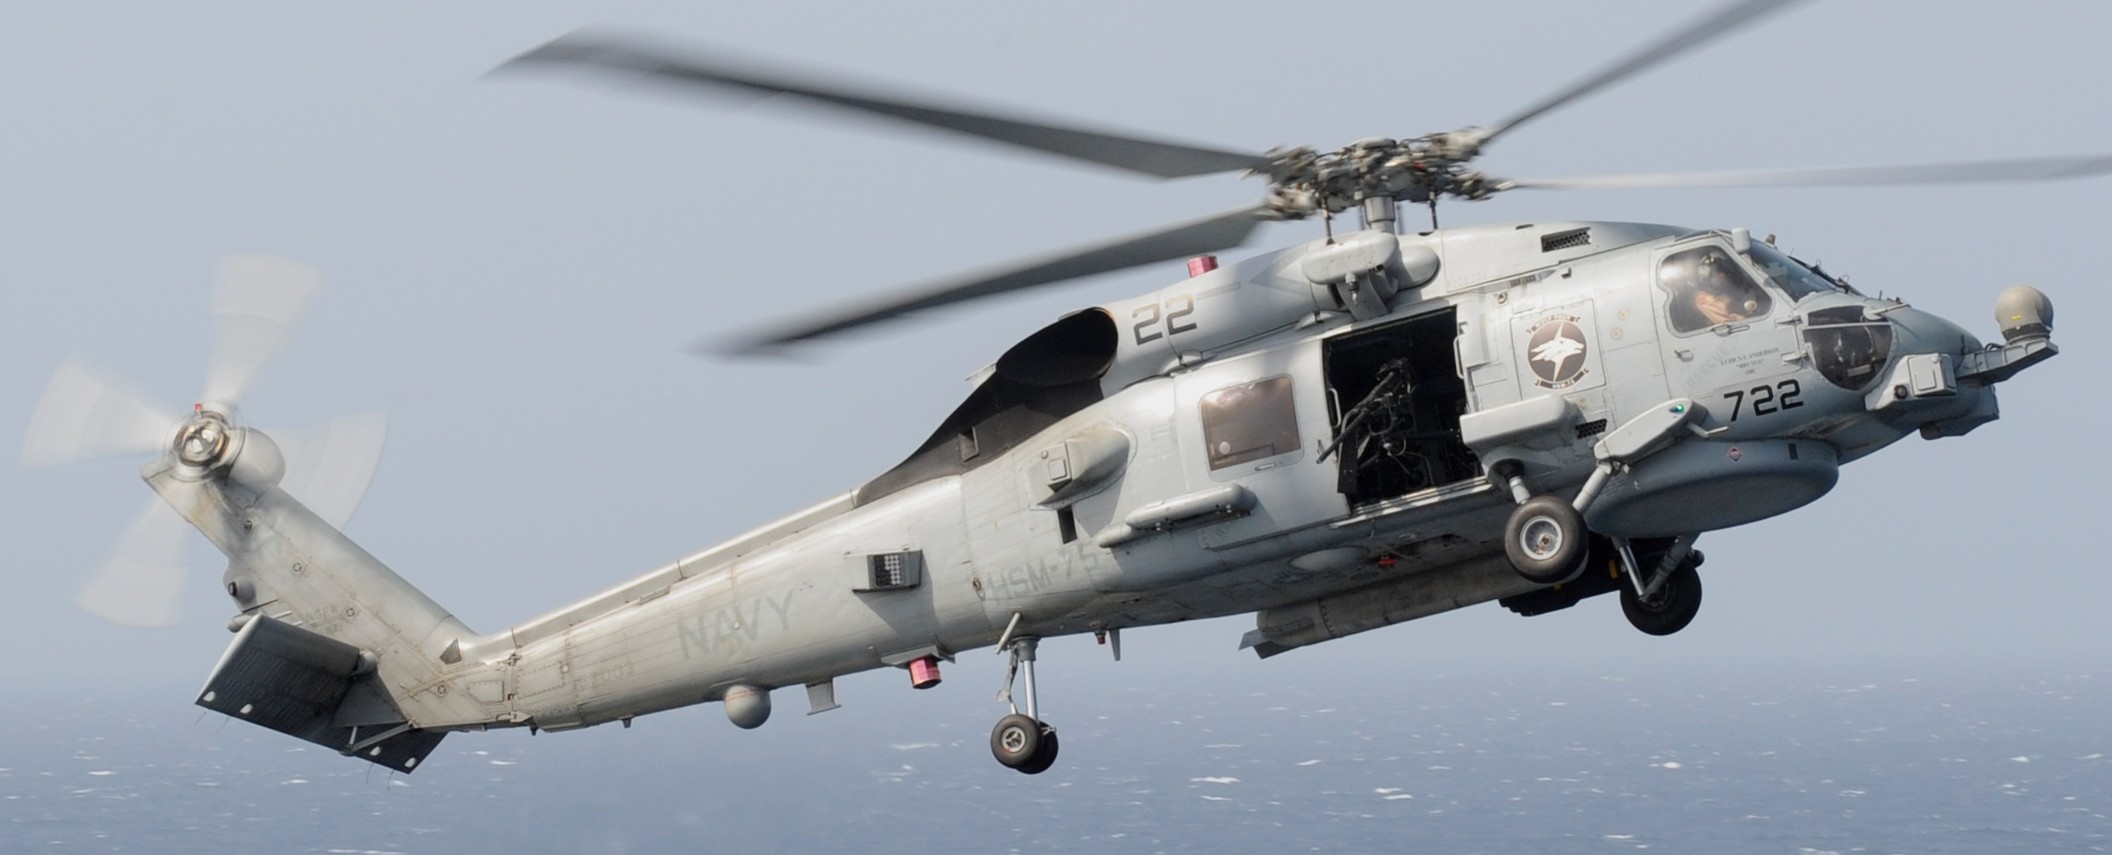 hsm-75 wolf pack helicopter maritime strike squadron mh-60r seahawk cvw-11 cvn-68 uss nimitz 21